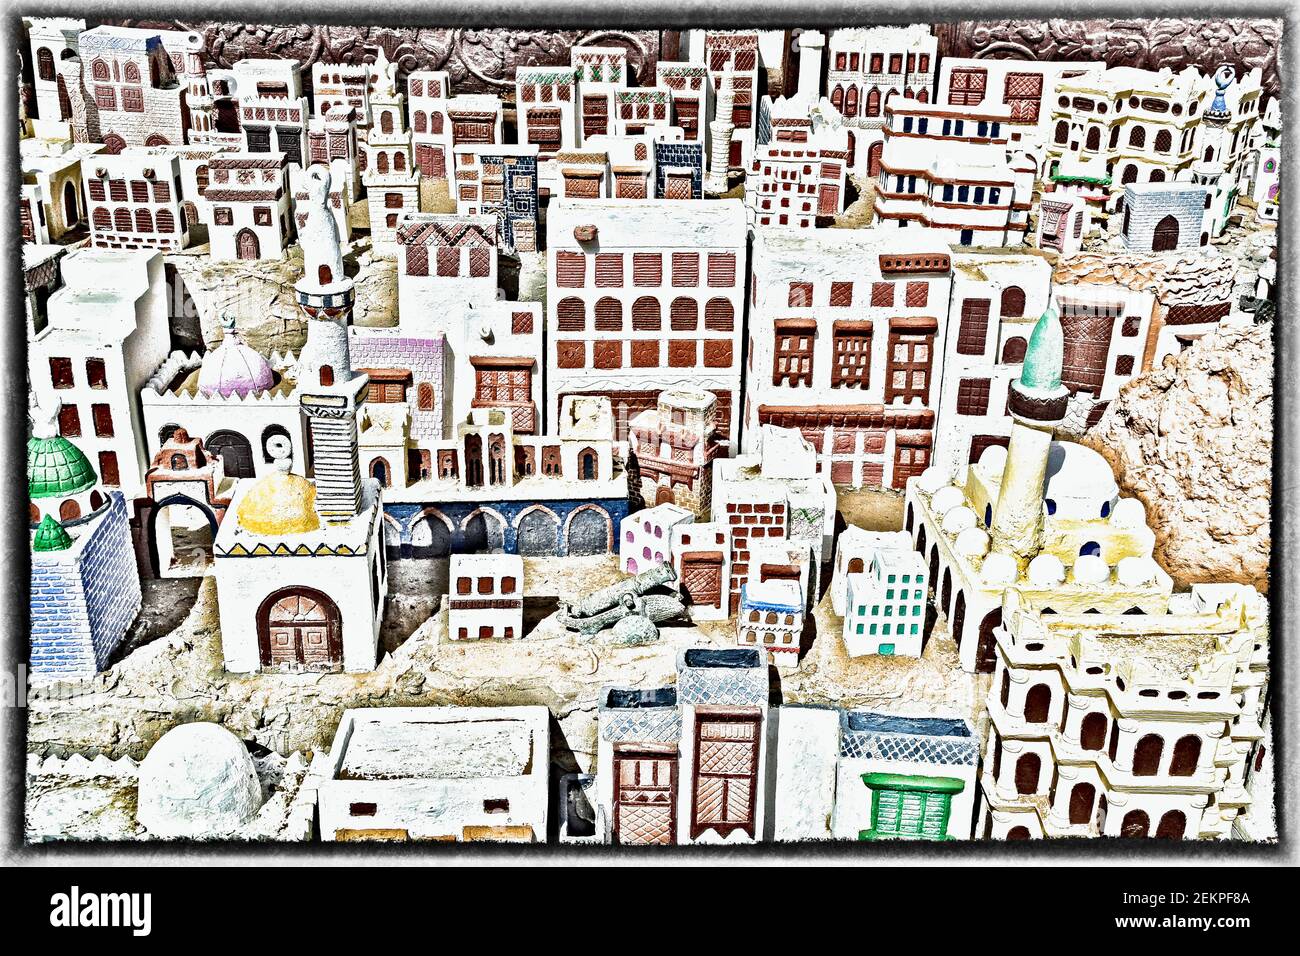 Model city made of sand - photo sketch - Jeddah Stock Photo